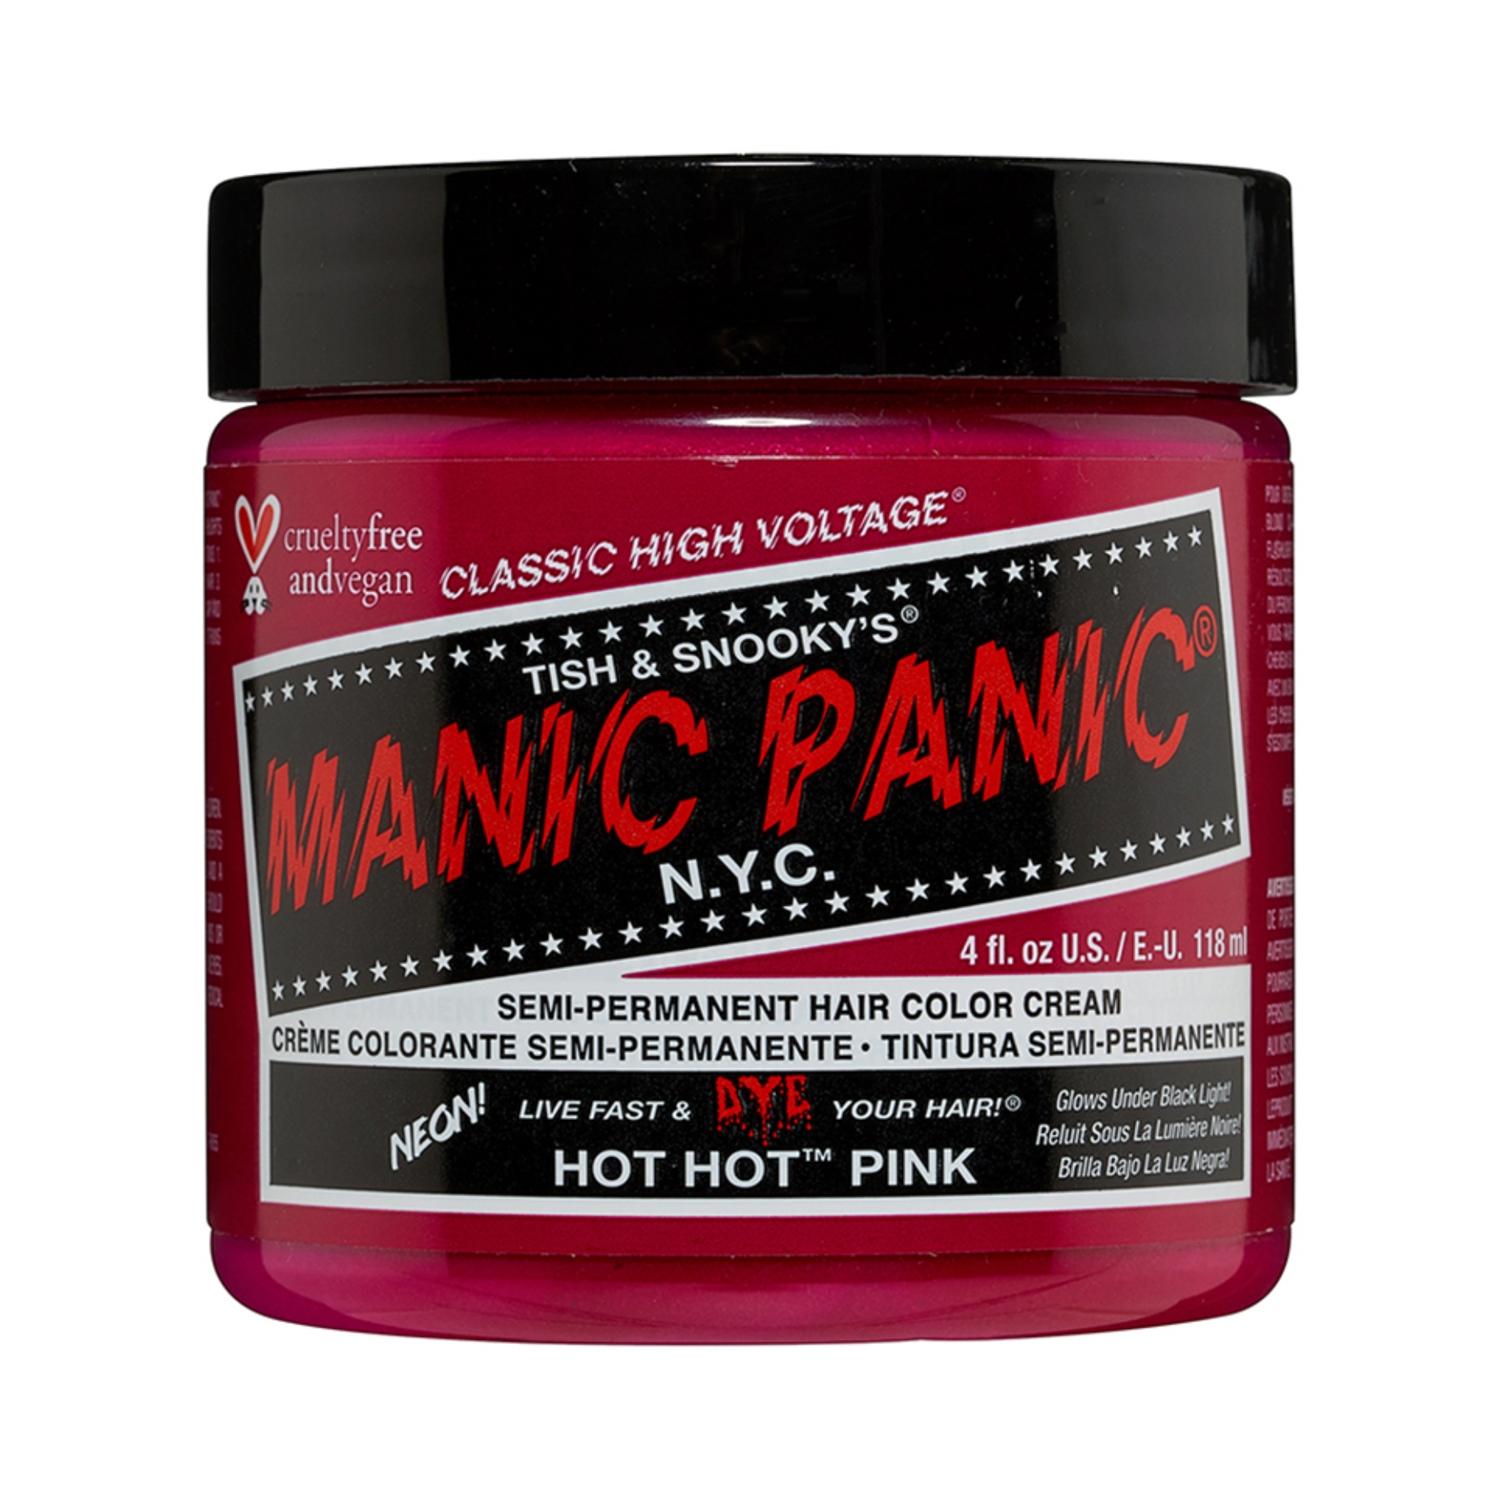 manic panic classic high voltage semi permanent hair color cream - hot hot pink (118ml)